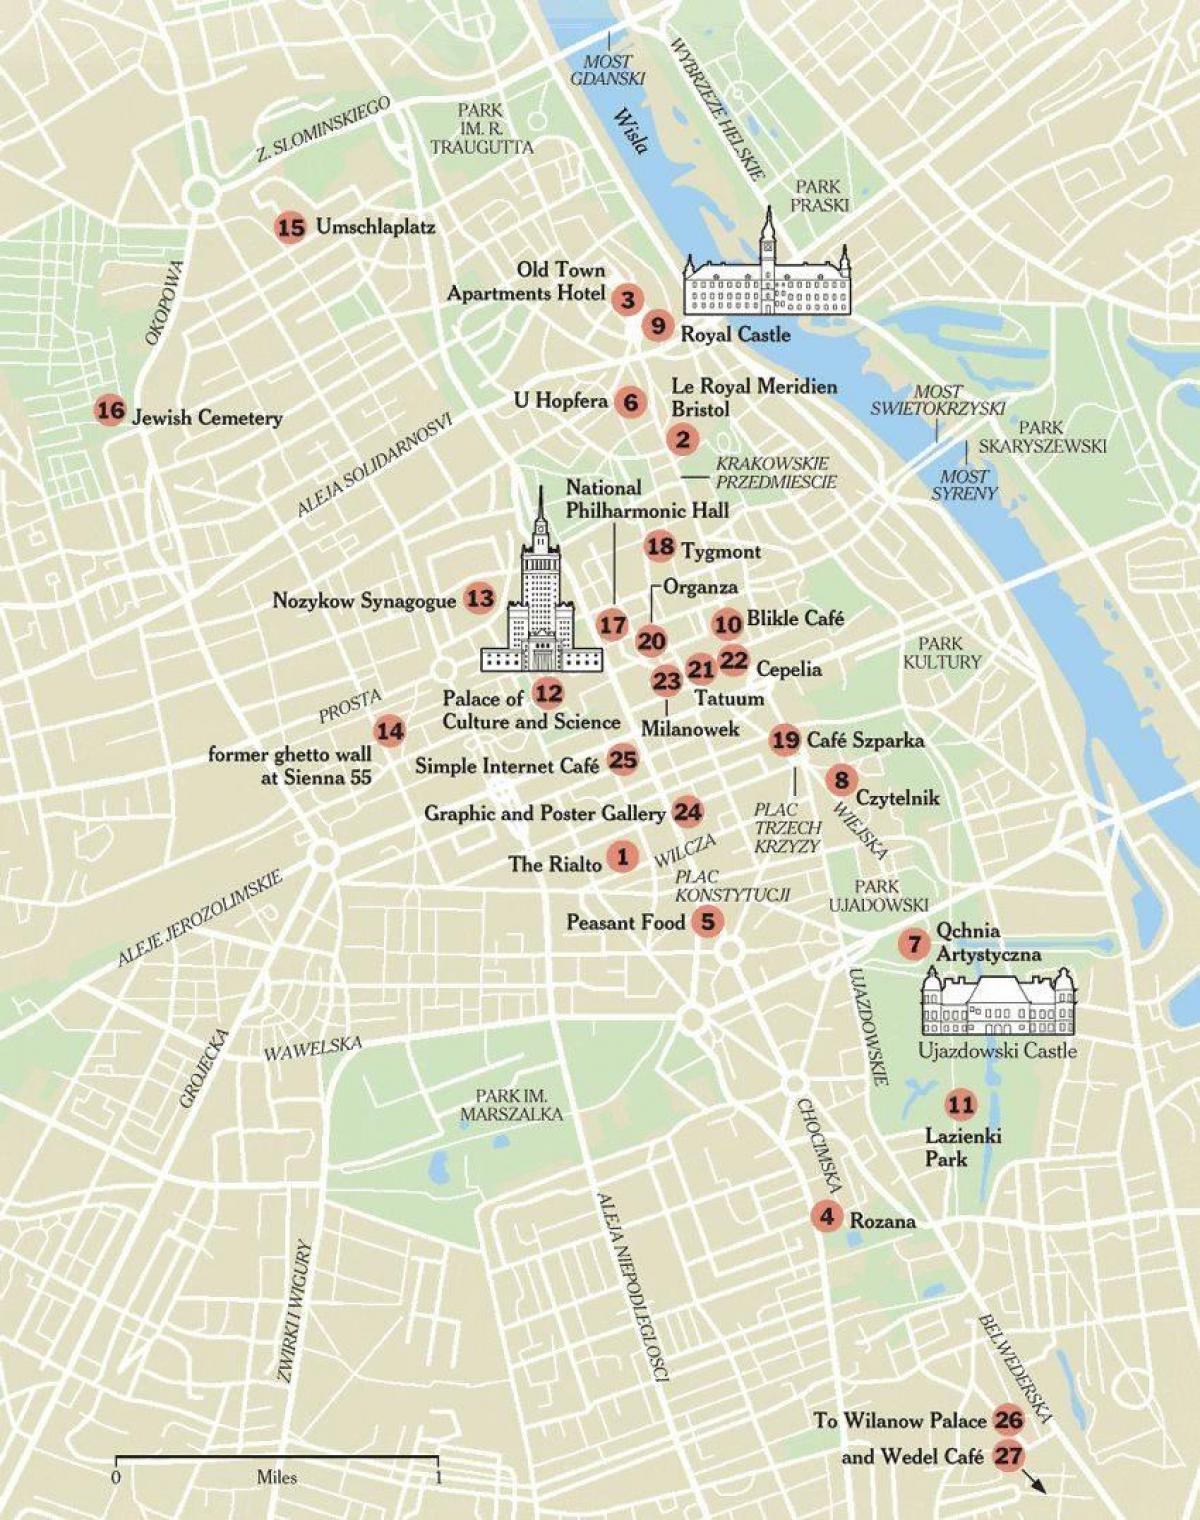 kort over Warszawa med turist-attraktioner